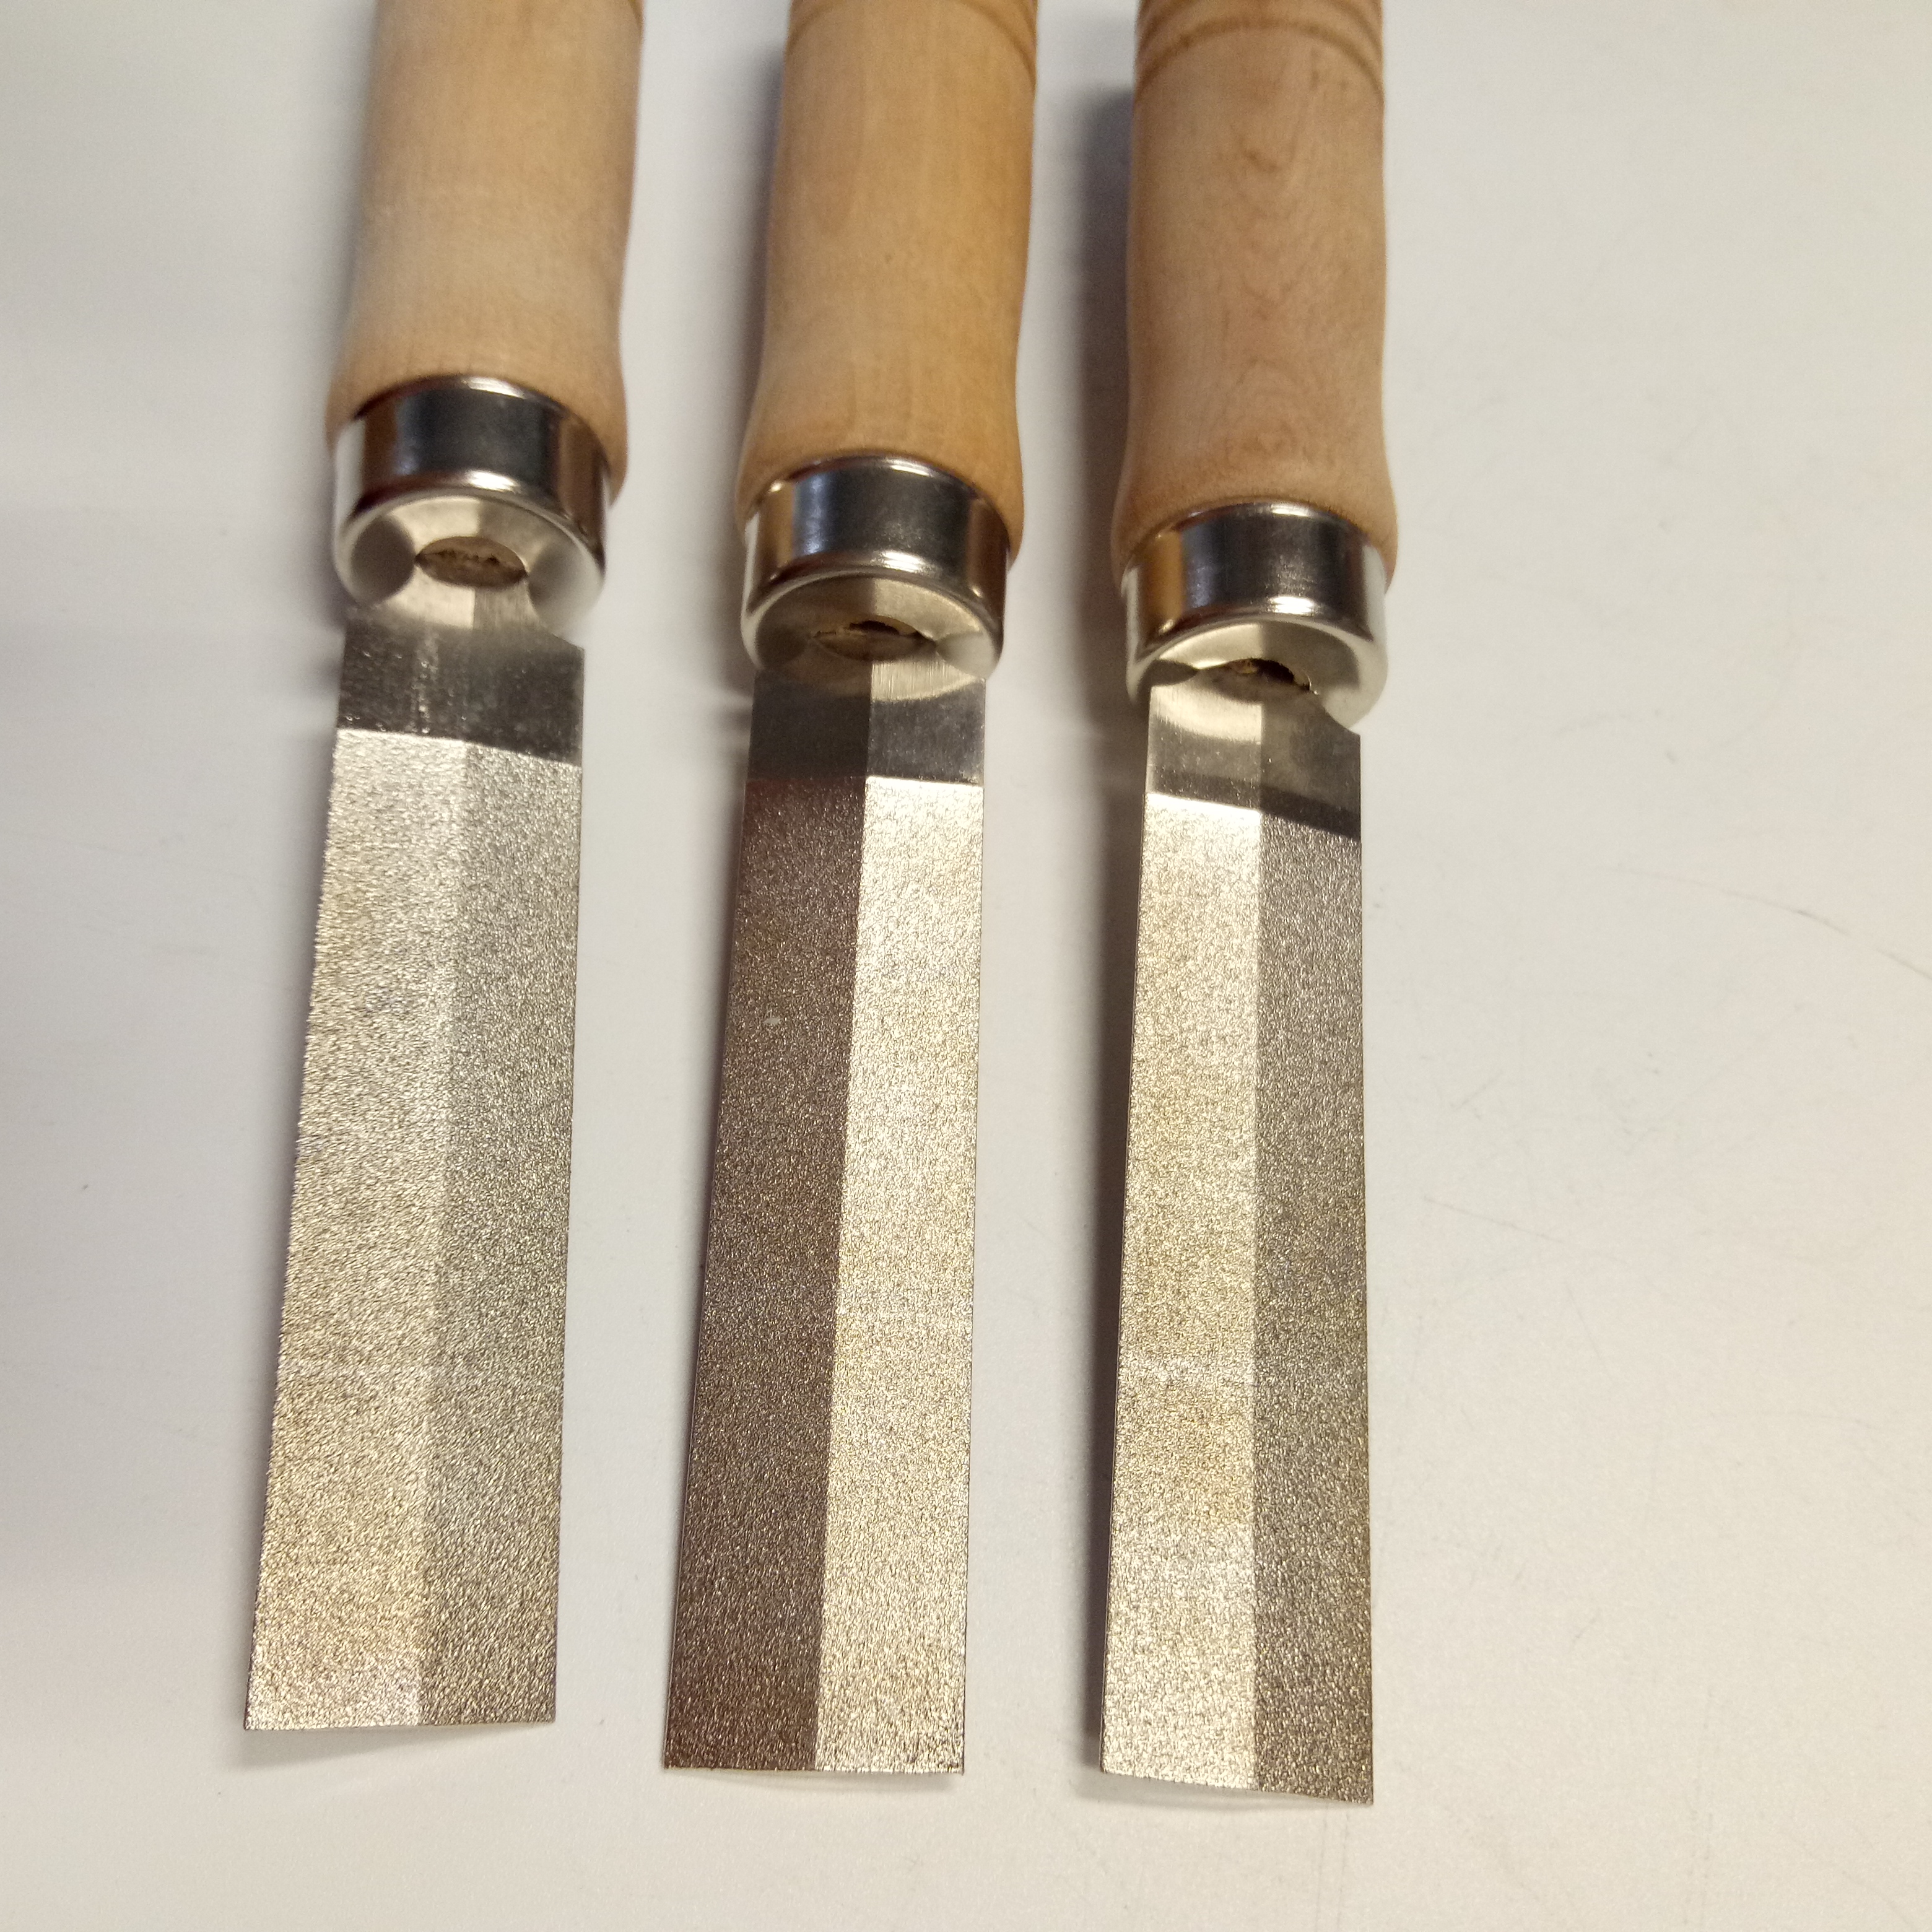 Herramienta de diamante electrochapada Manual, limas de aguja para carpintería, escofina de diamante especial para madera